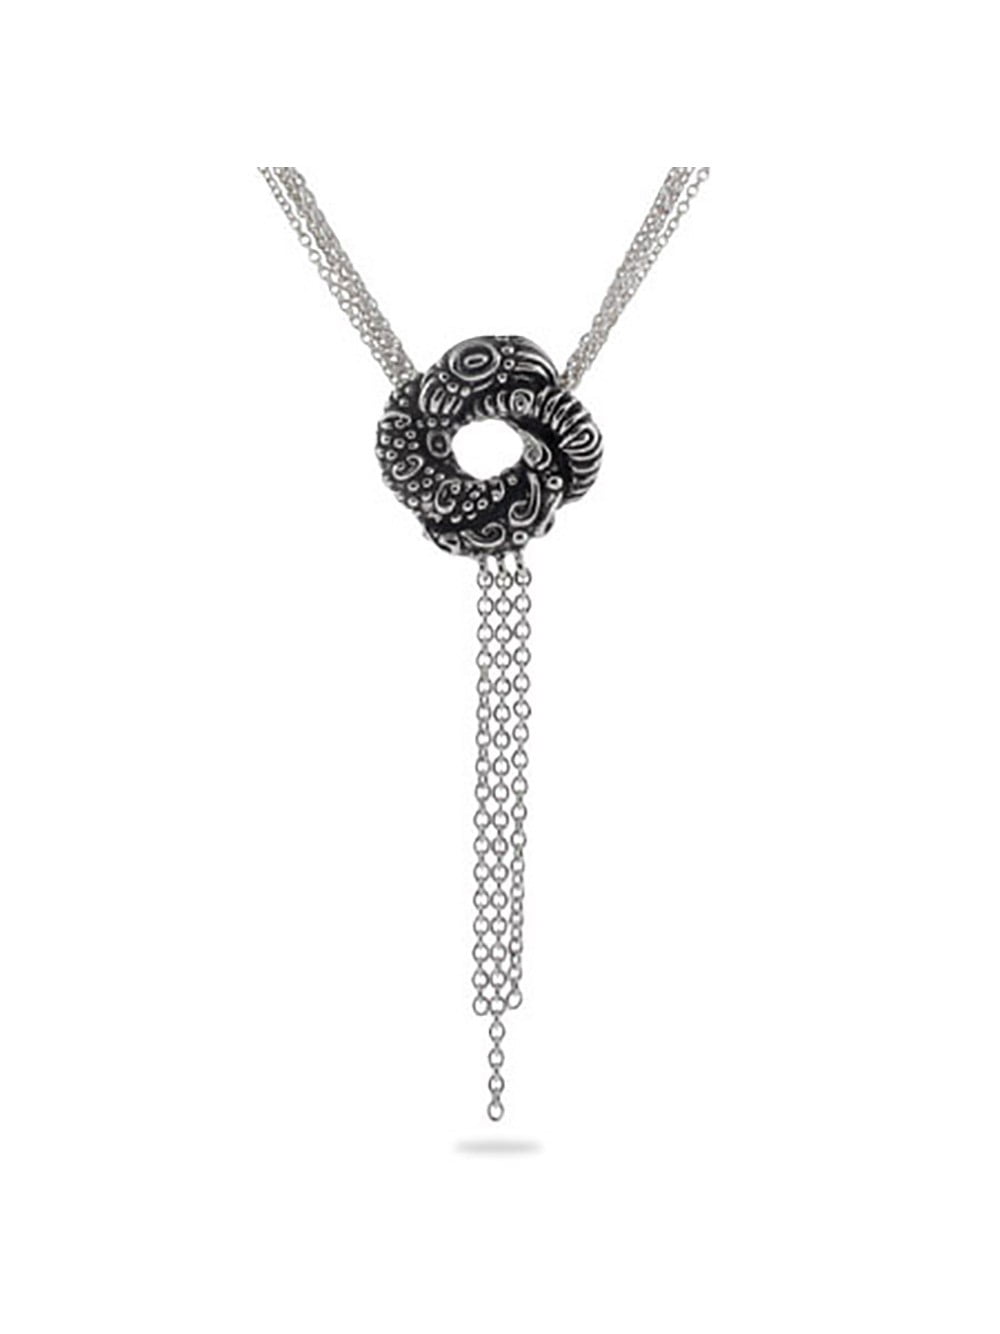 Friendship Knot Necklace By Sophie Jones Jewellery | notonthehighstreet.com